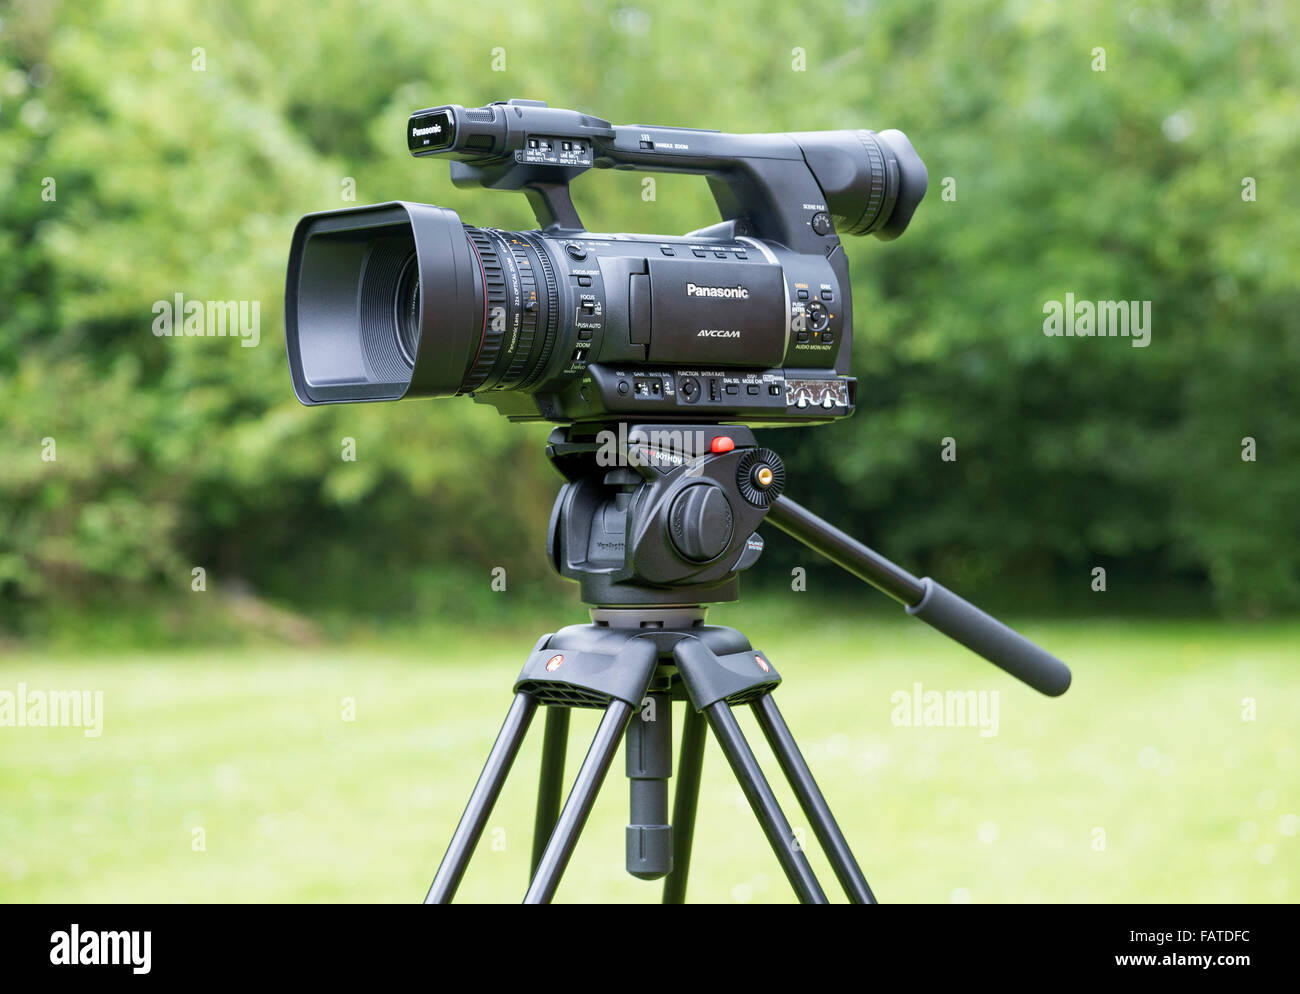 professional HD camcorder - Panasonic AG-AC160 Stock Photo - Alamy